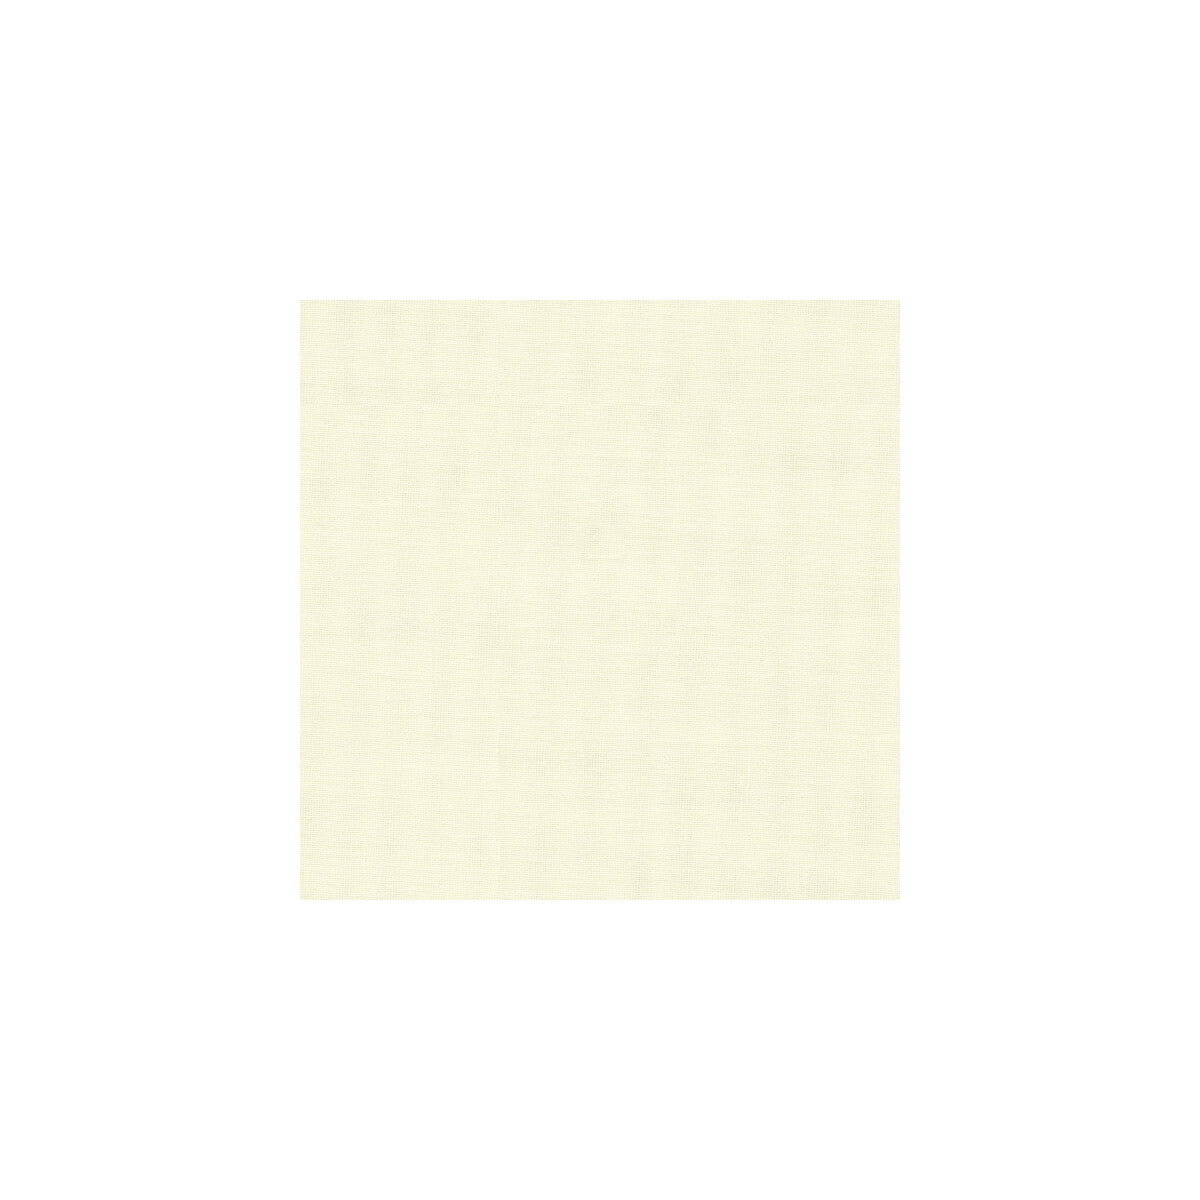 Kravet Basics fabric in 3704-101 color - pattern 3704.101.0 - by Kravet Basics in the Gis collection